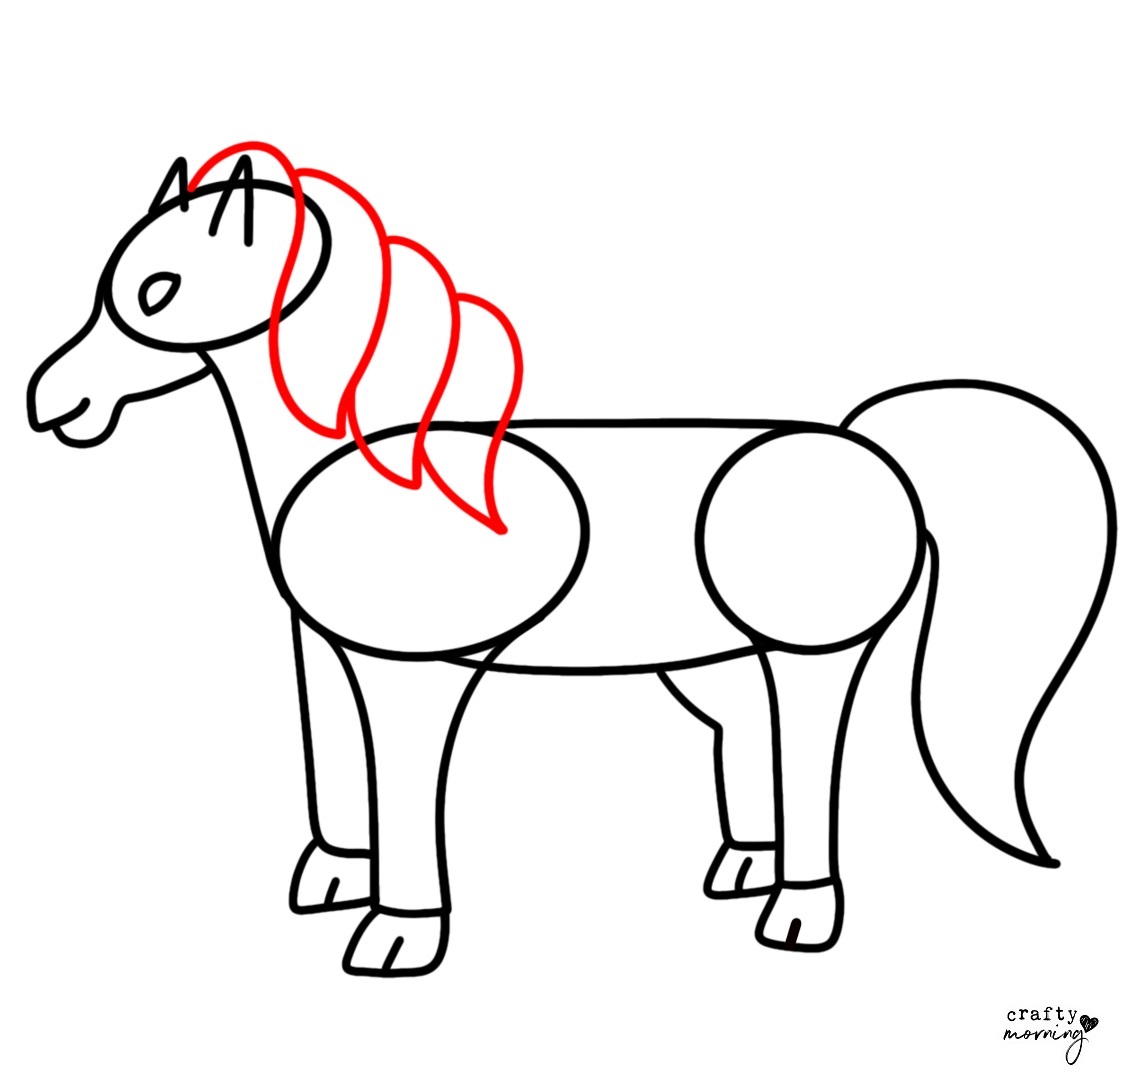 Drawing a Cartoon 3/4 View Horse | Curvey Lines Art School and Print Shop